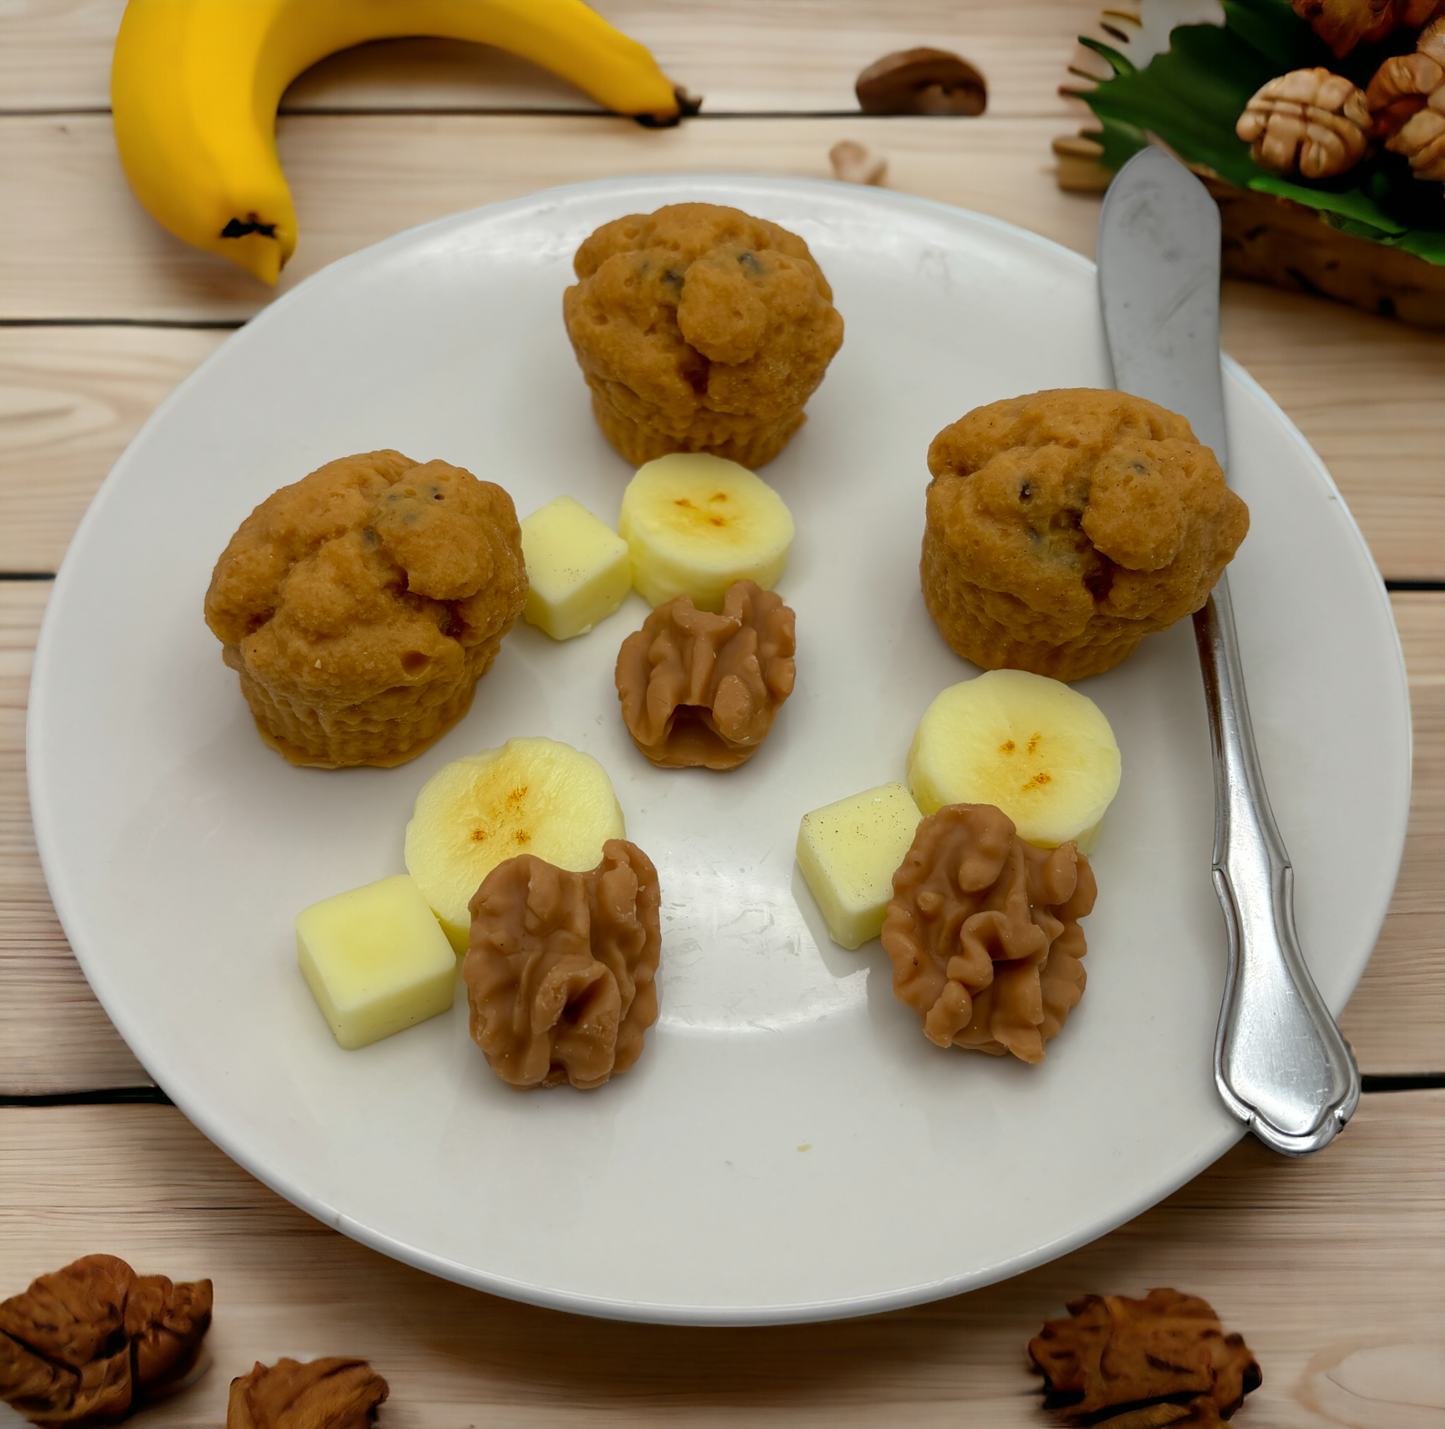 Small Banana Nut Muffin Wax Melts/Bananas, Walnuts, Muffins, Butter Wax Melts/Soy Wax Melts/Strongly Scented Wax Melts/Wax Tarts for Wax Warmers. 4.85 oz.